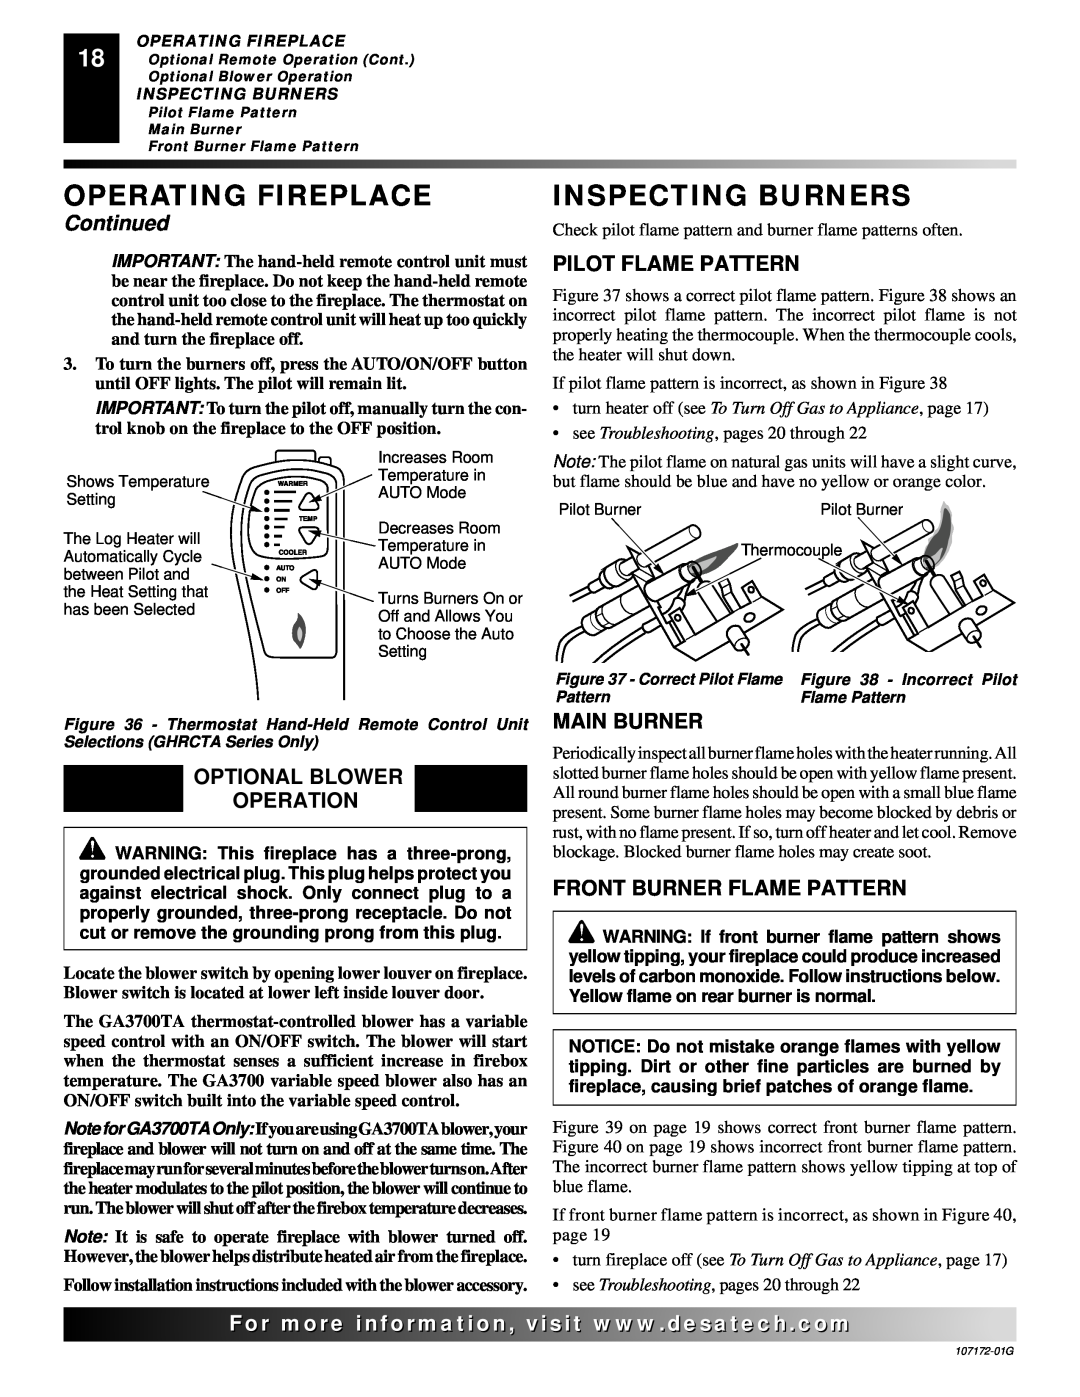 Desa VSGF33PRA Inspecting Burners, Pilot Flame Pattern, Optional Blower Operation, Main Burner, Front Burner Flame Pattern 